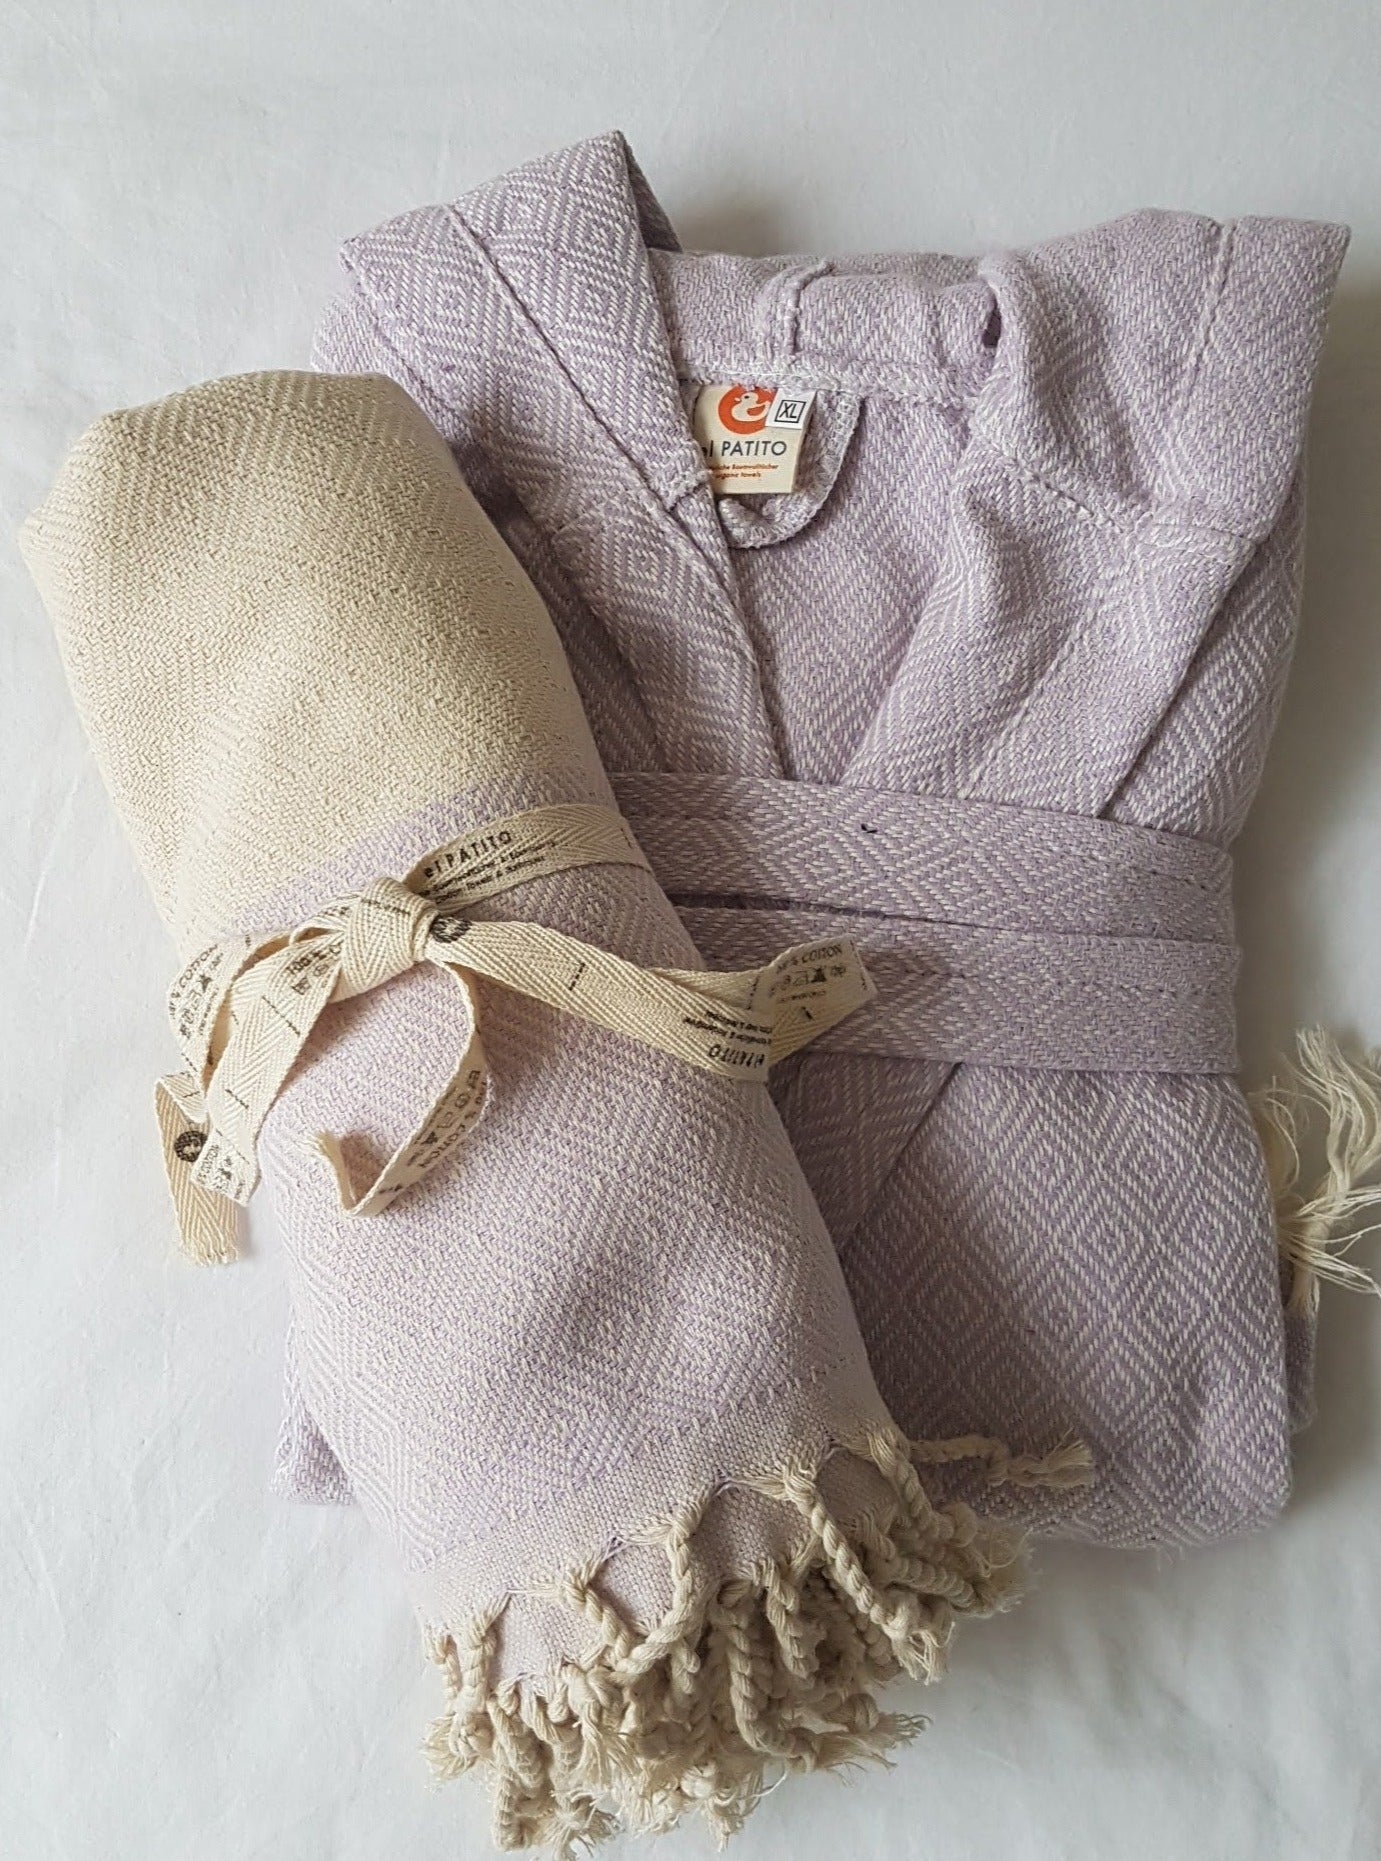 el patito turkish towels and bathrobes natural cotton pestemal hammam towels lilac lavender